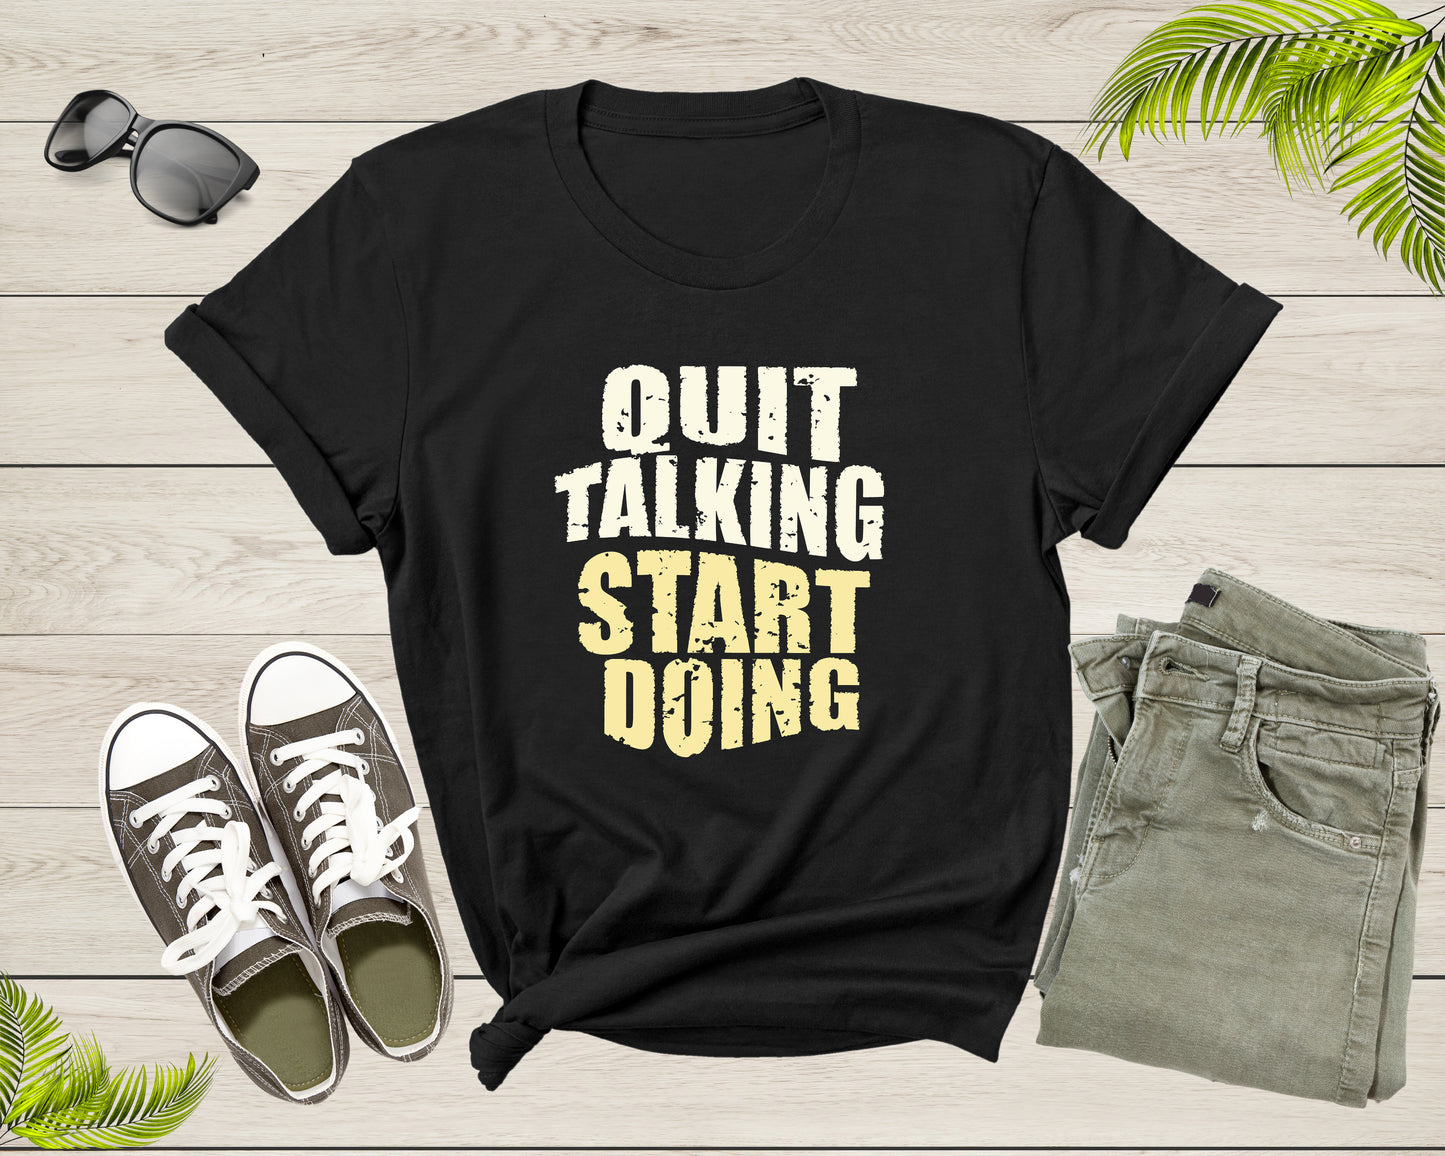 Quit Talking Start Doing Motivational Incentive Triggering T-Shirt Quote Lover Gift T Shirt for Men Women Kids Boys Girls Teens Tshirt